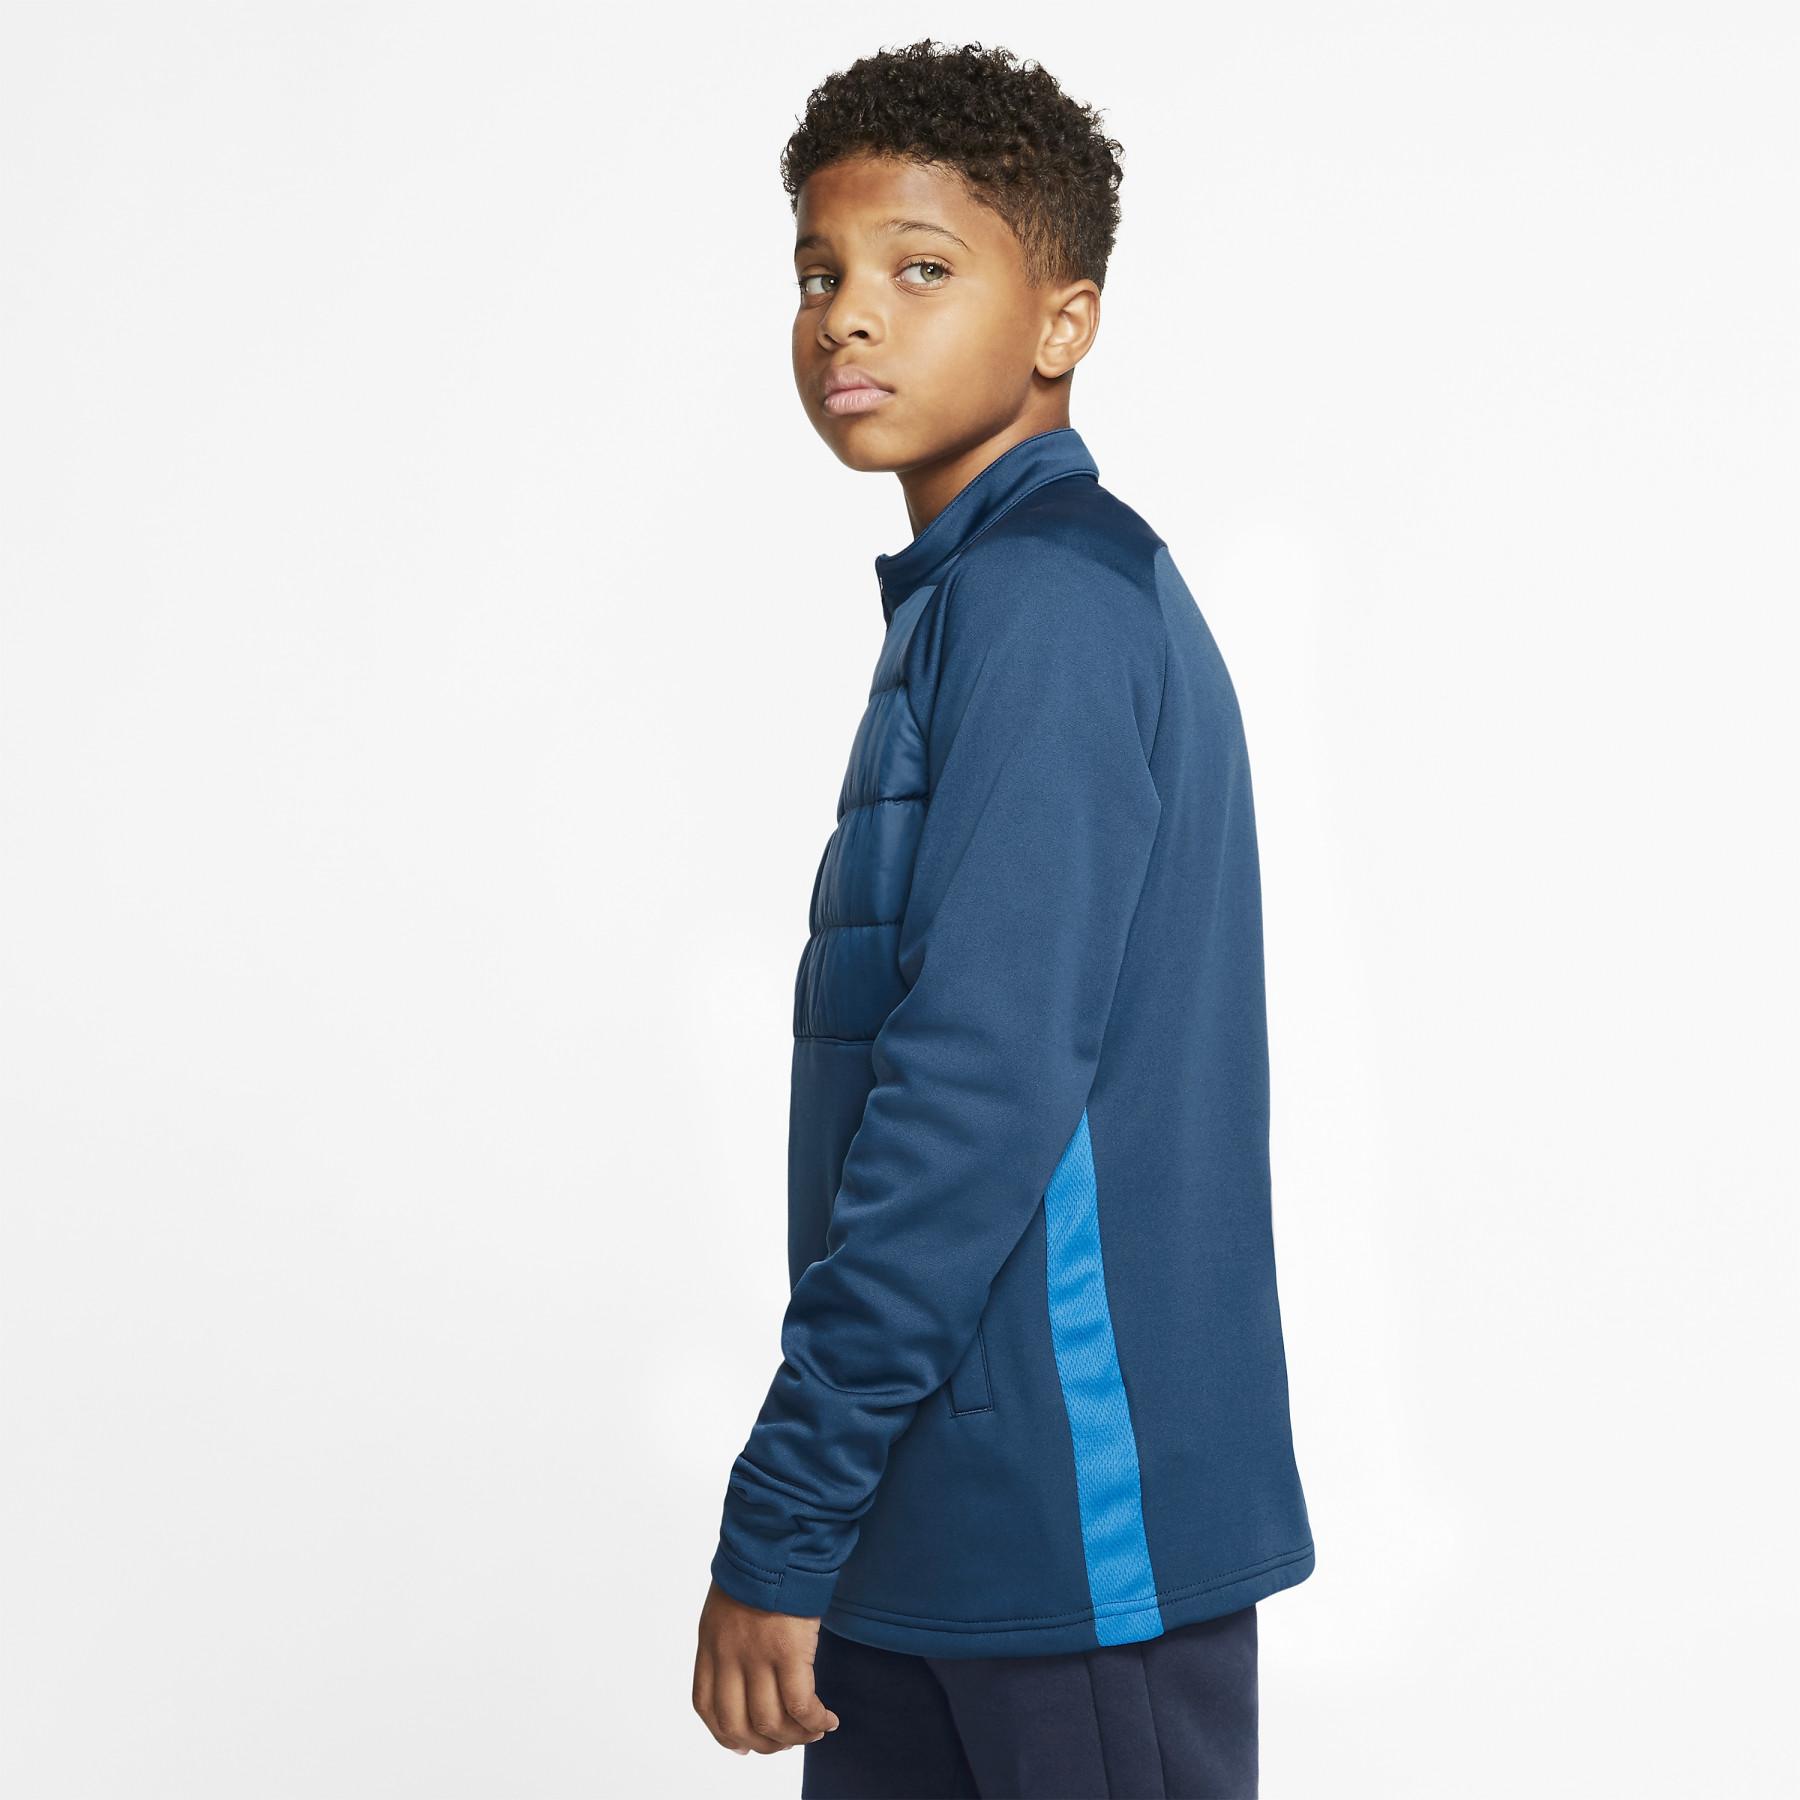 Bluza dziecięca Nike Dri-Fit